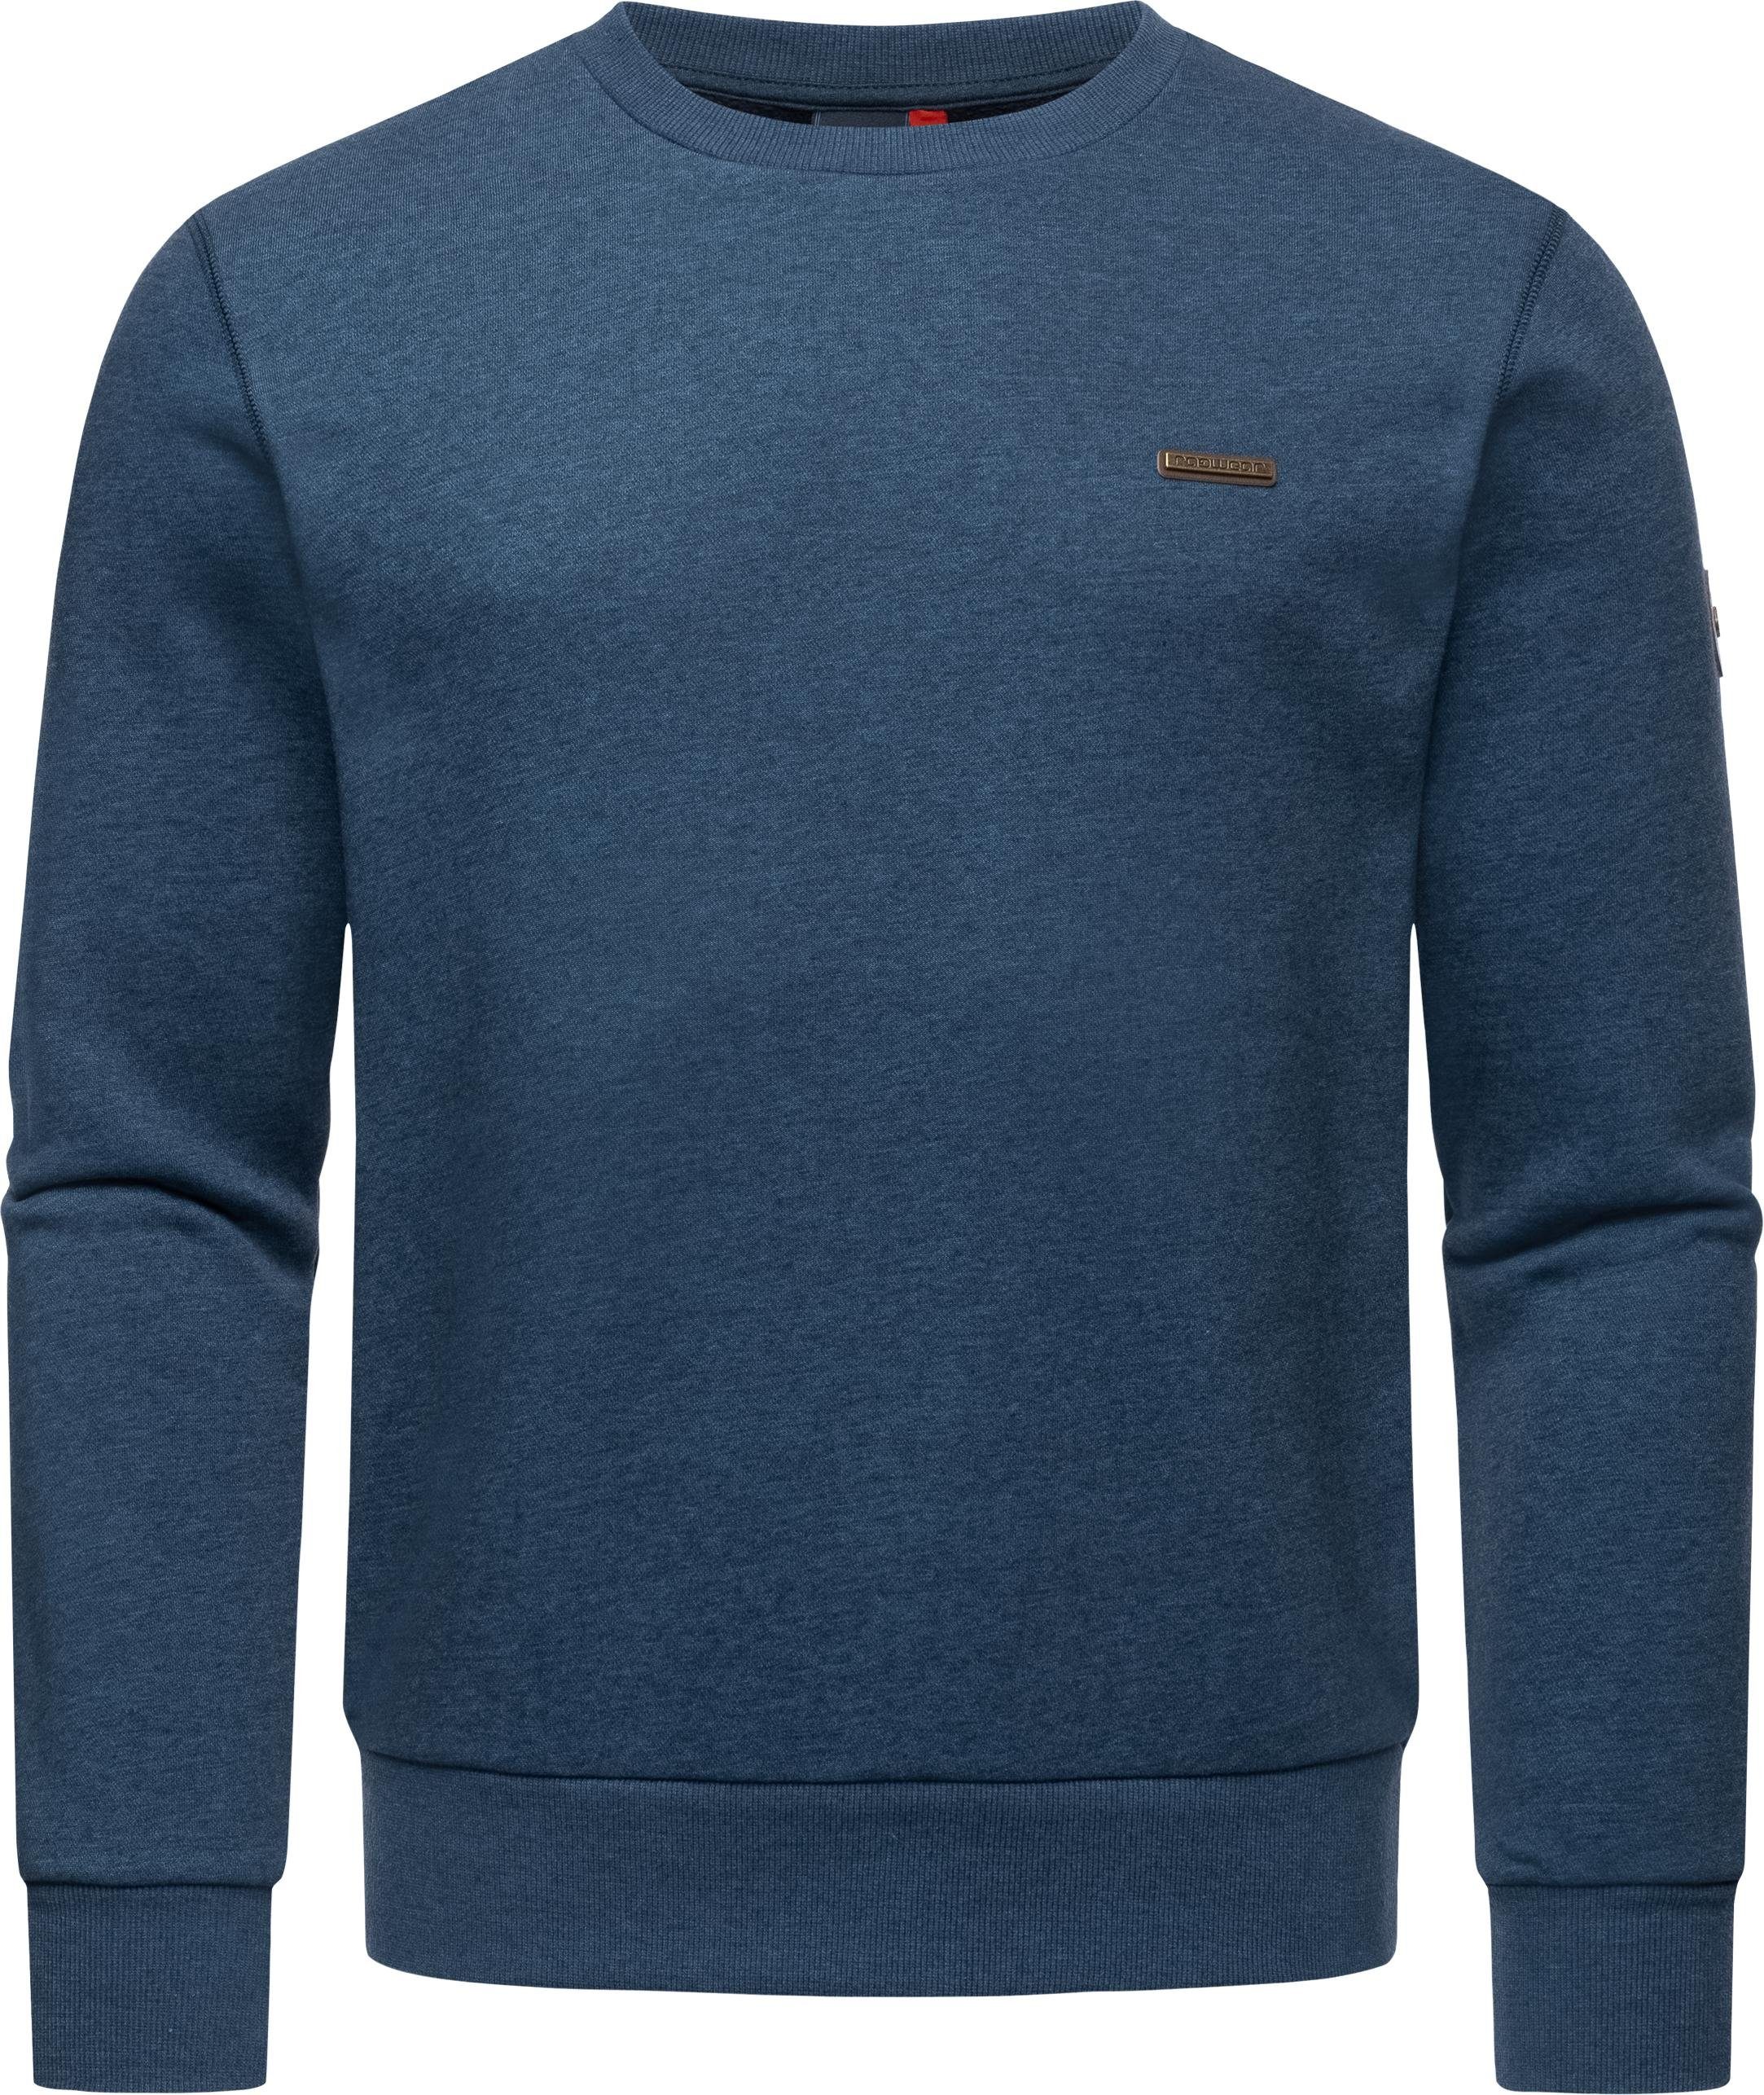 Ragwear Sweater Indie Cooler Basic Herren Pullover navy